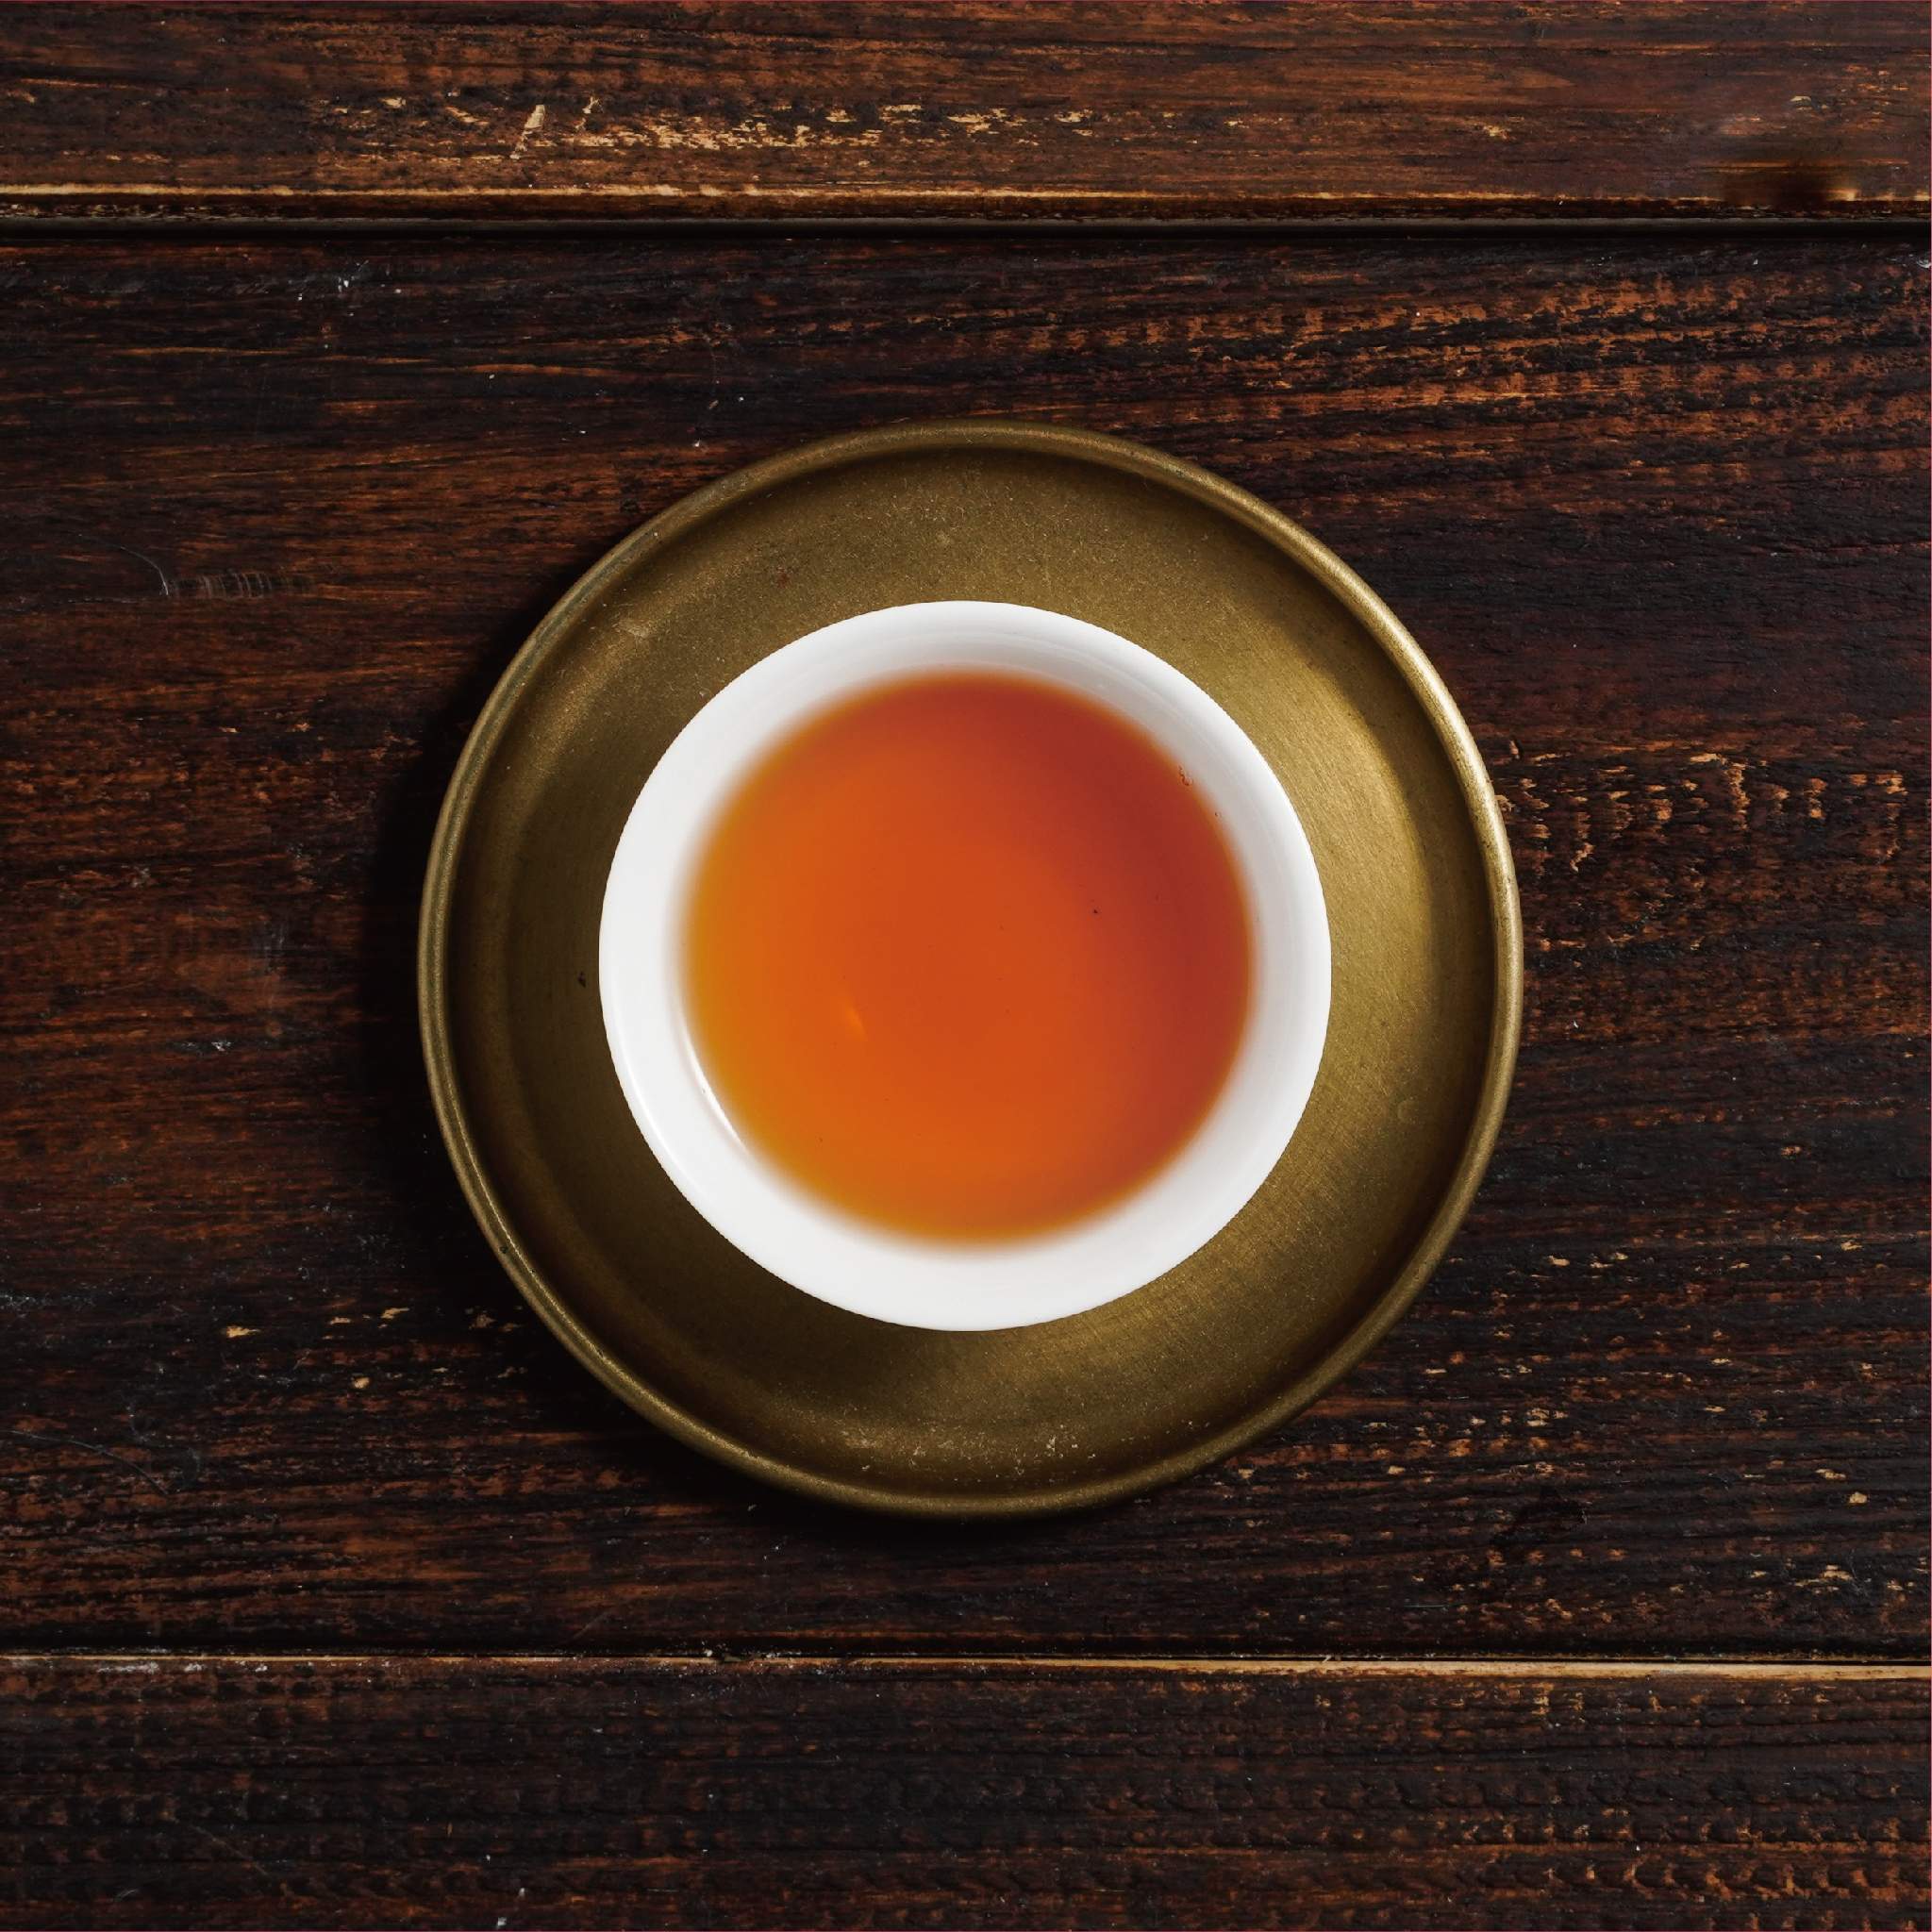 tie guan yin iron goddess of mercy tea liquor in cup